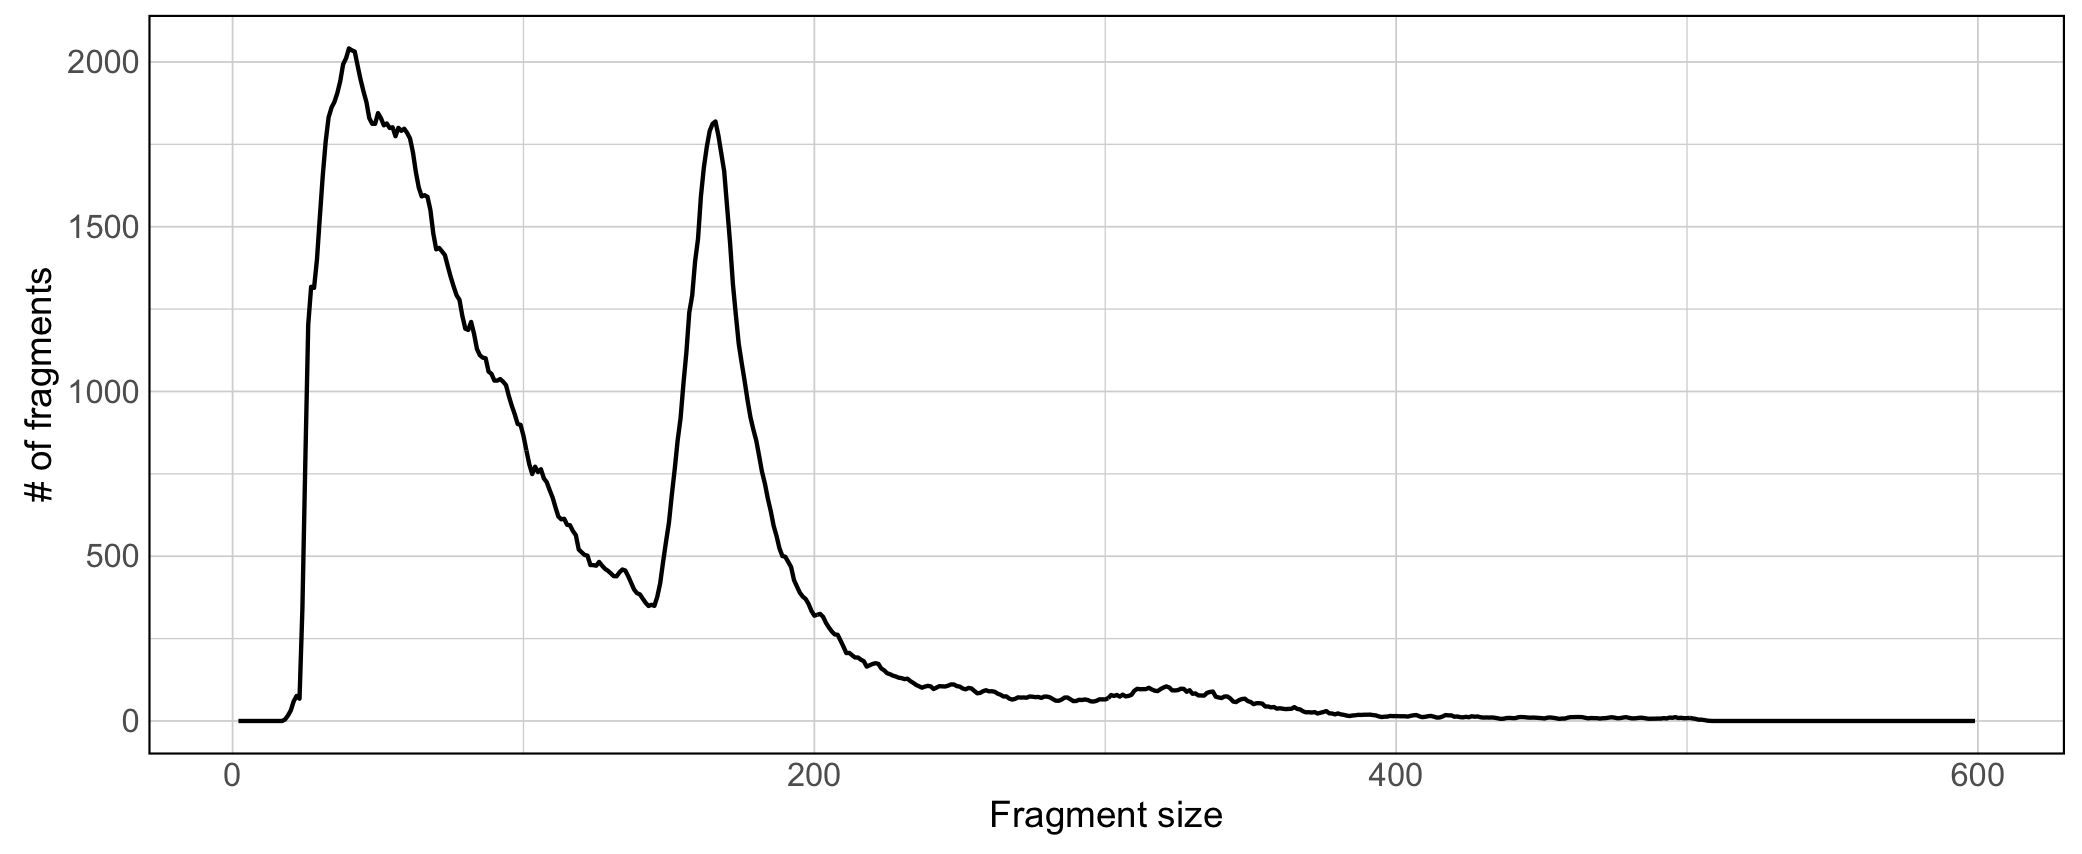 fragment_size_distribution